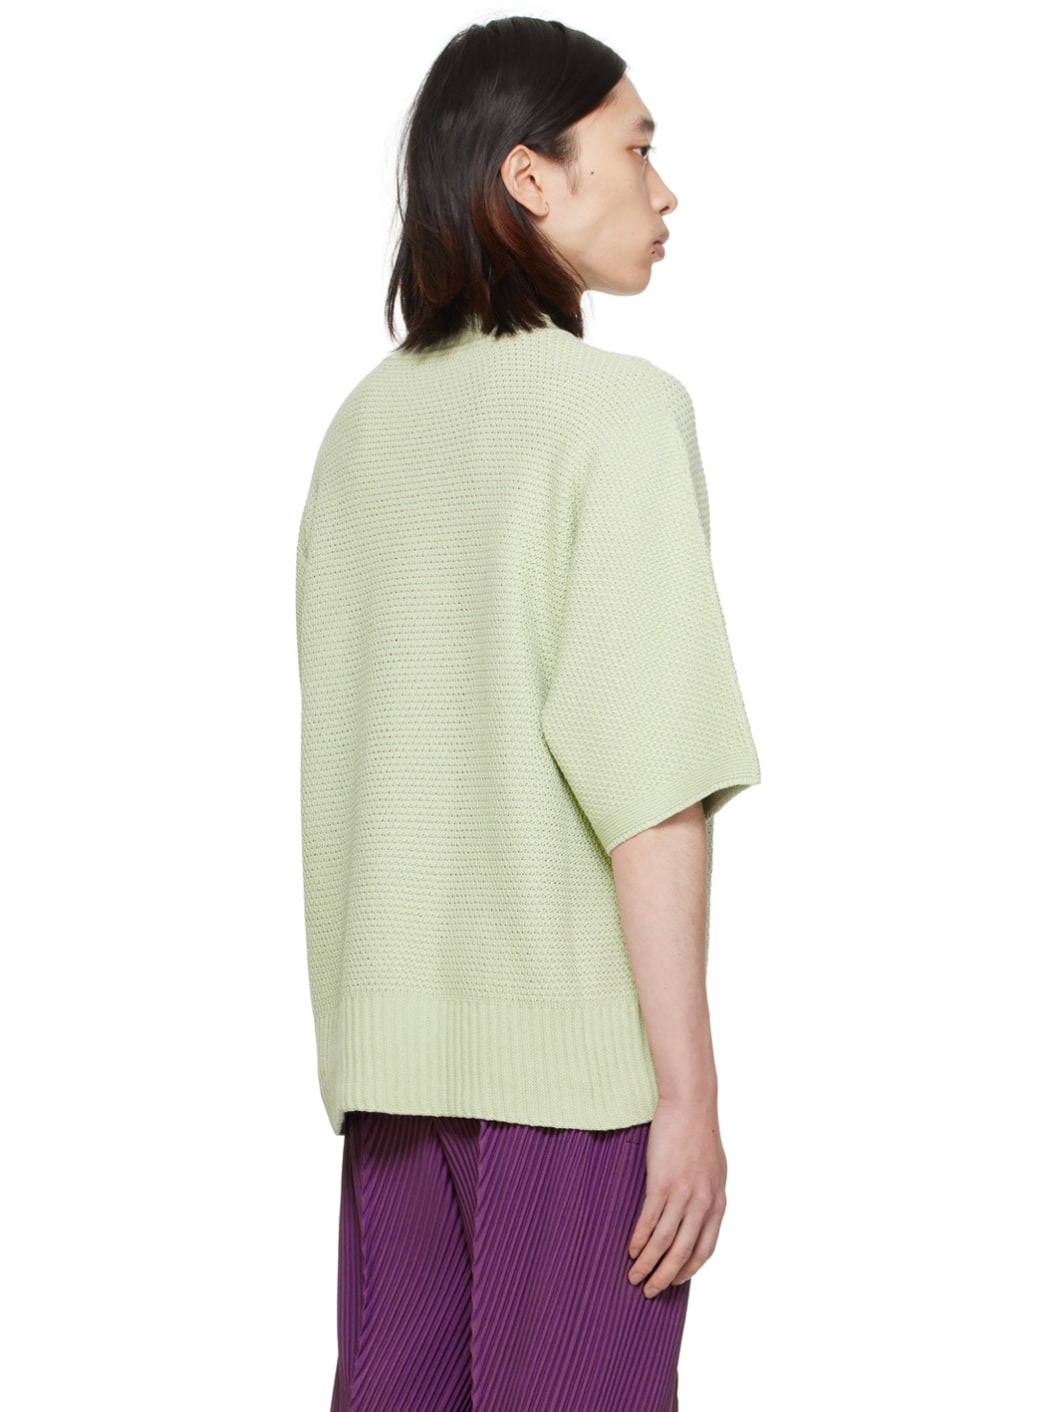 Green Rustic Knit Sweater - 3